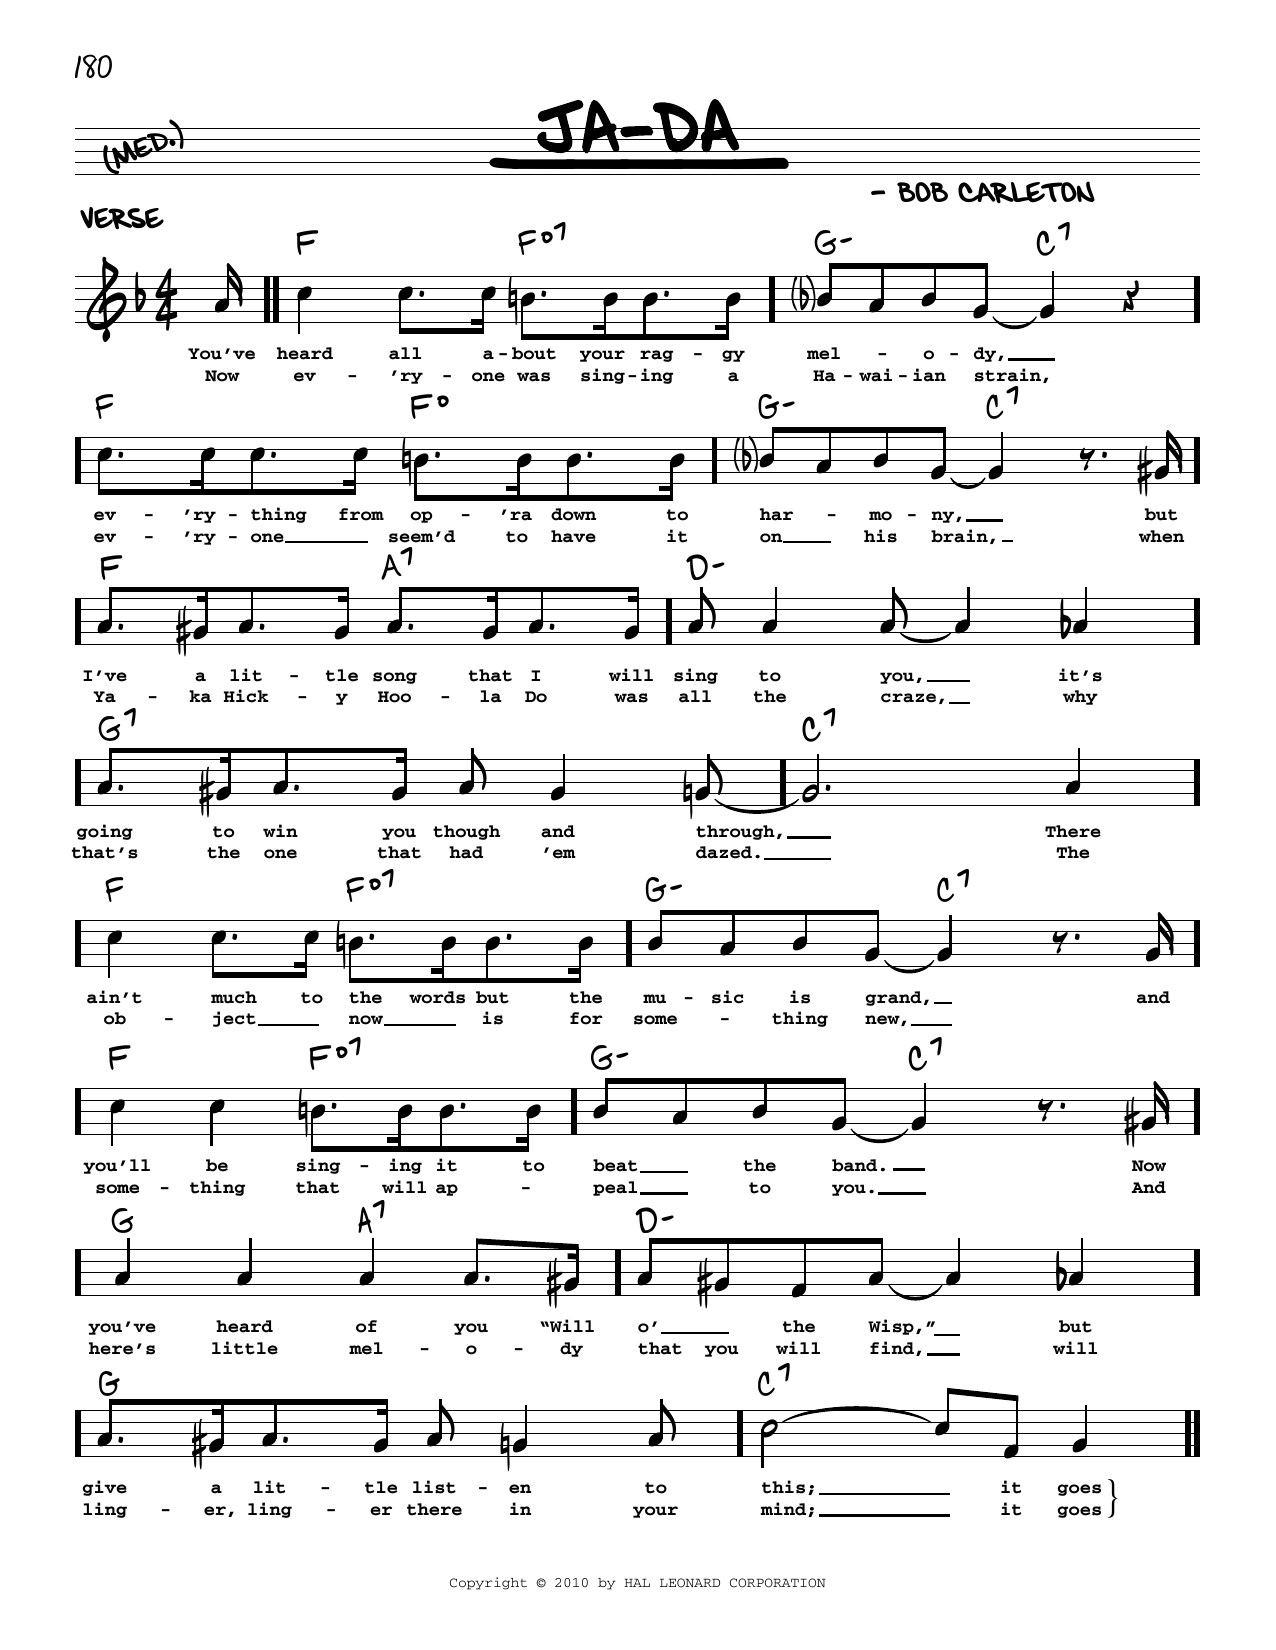 Download Bob Carleton Ja-Da (arr. Robert Rawlins) Sheet Music and learn how to play Real Book – Melody, Lyrics & Chords PDF digital score in minutes